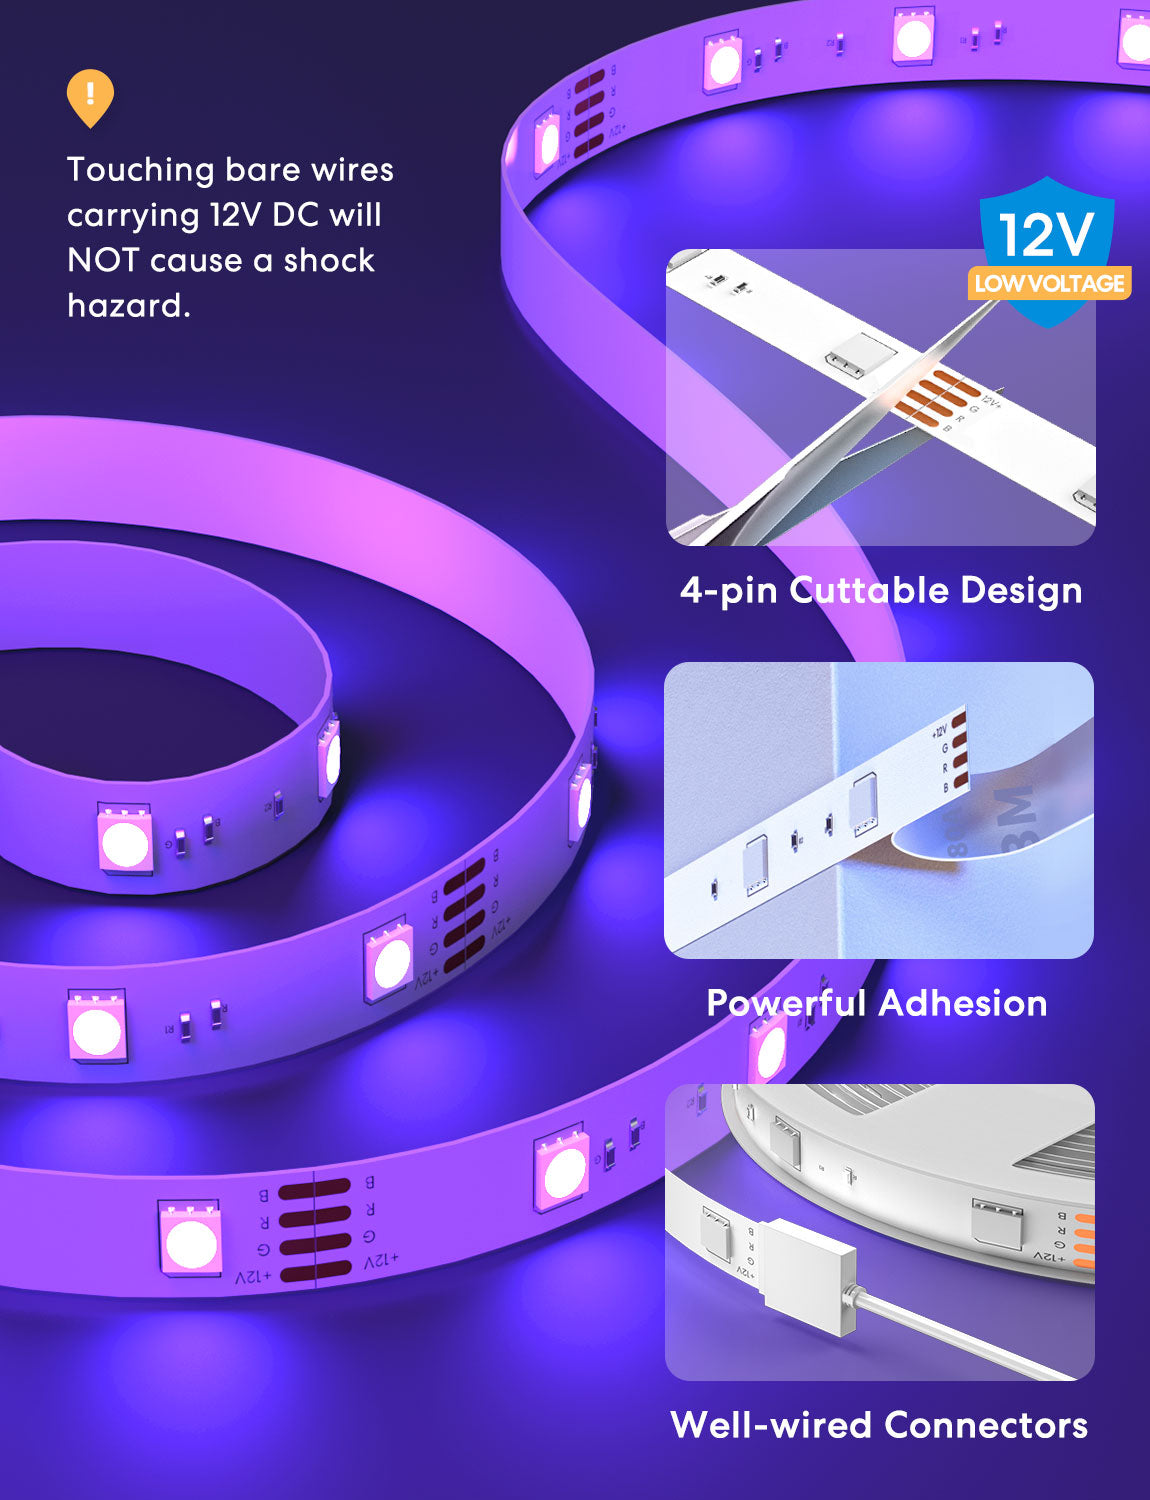 Govee LED Strip 5m Long Alexa Smart RGB WiFi LED Strip